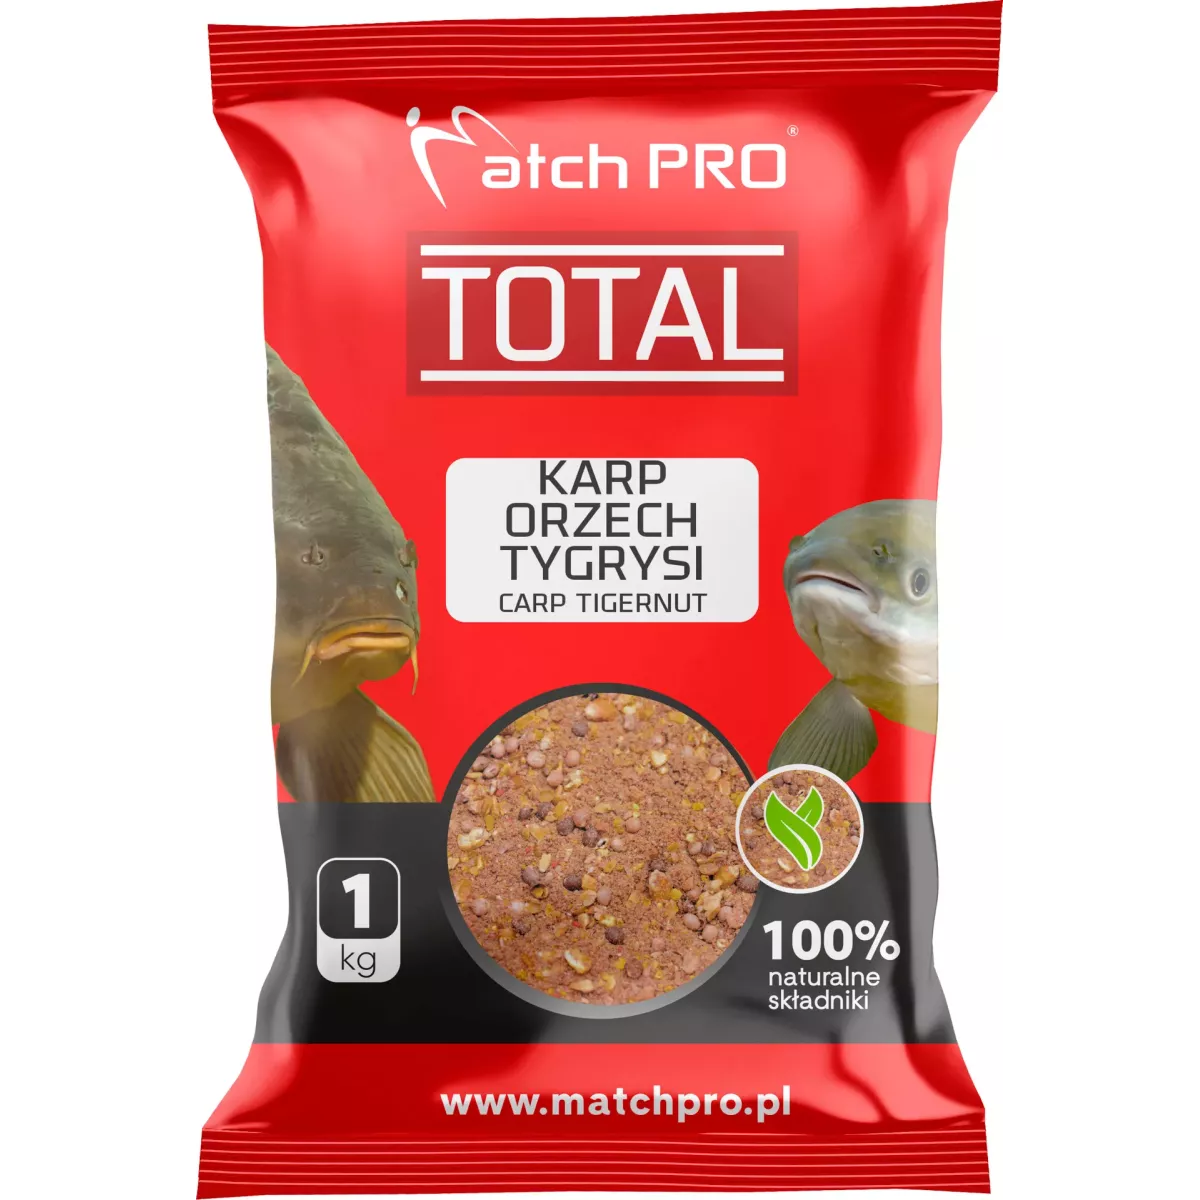 Zanęta MatchPro Total 1kg - KARP ORZECH TYGRYSI